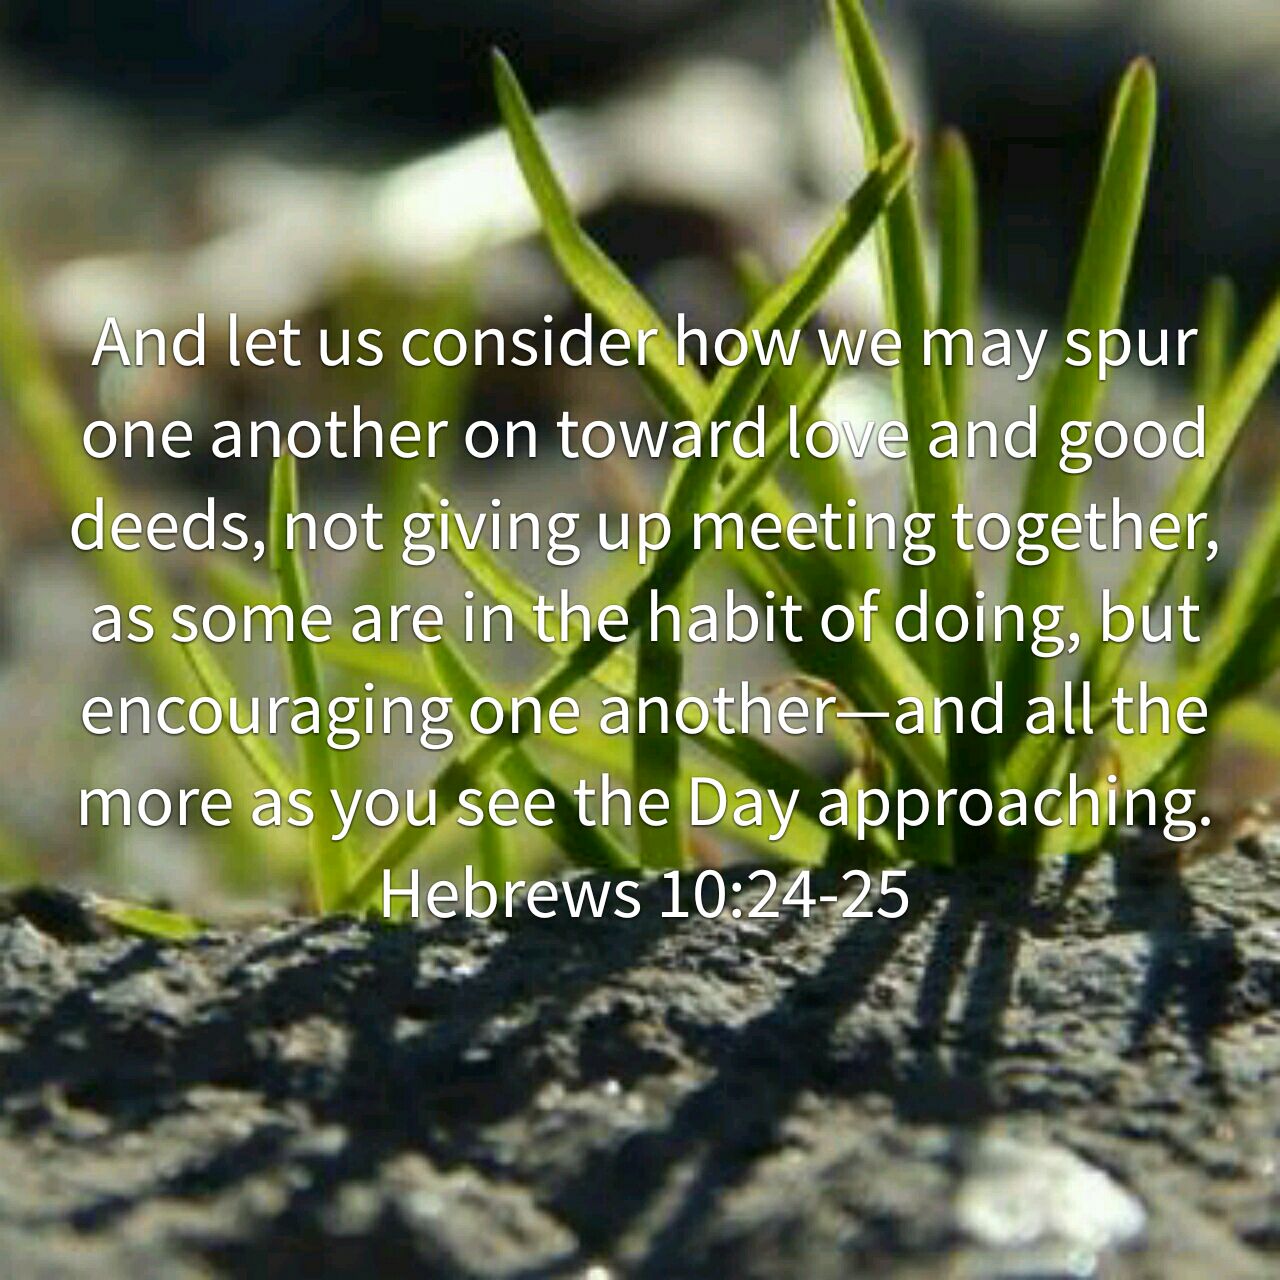 baby grass Hebrews 1-:24-25